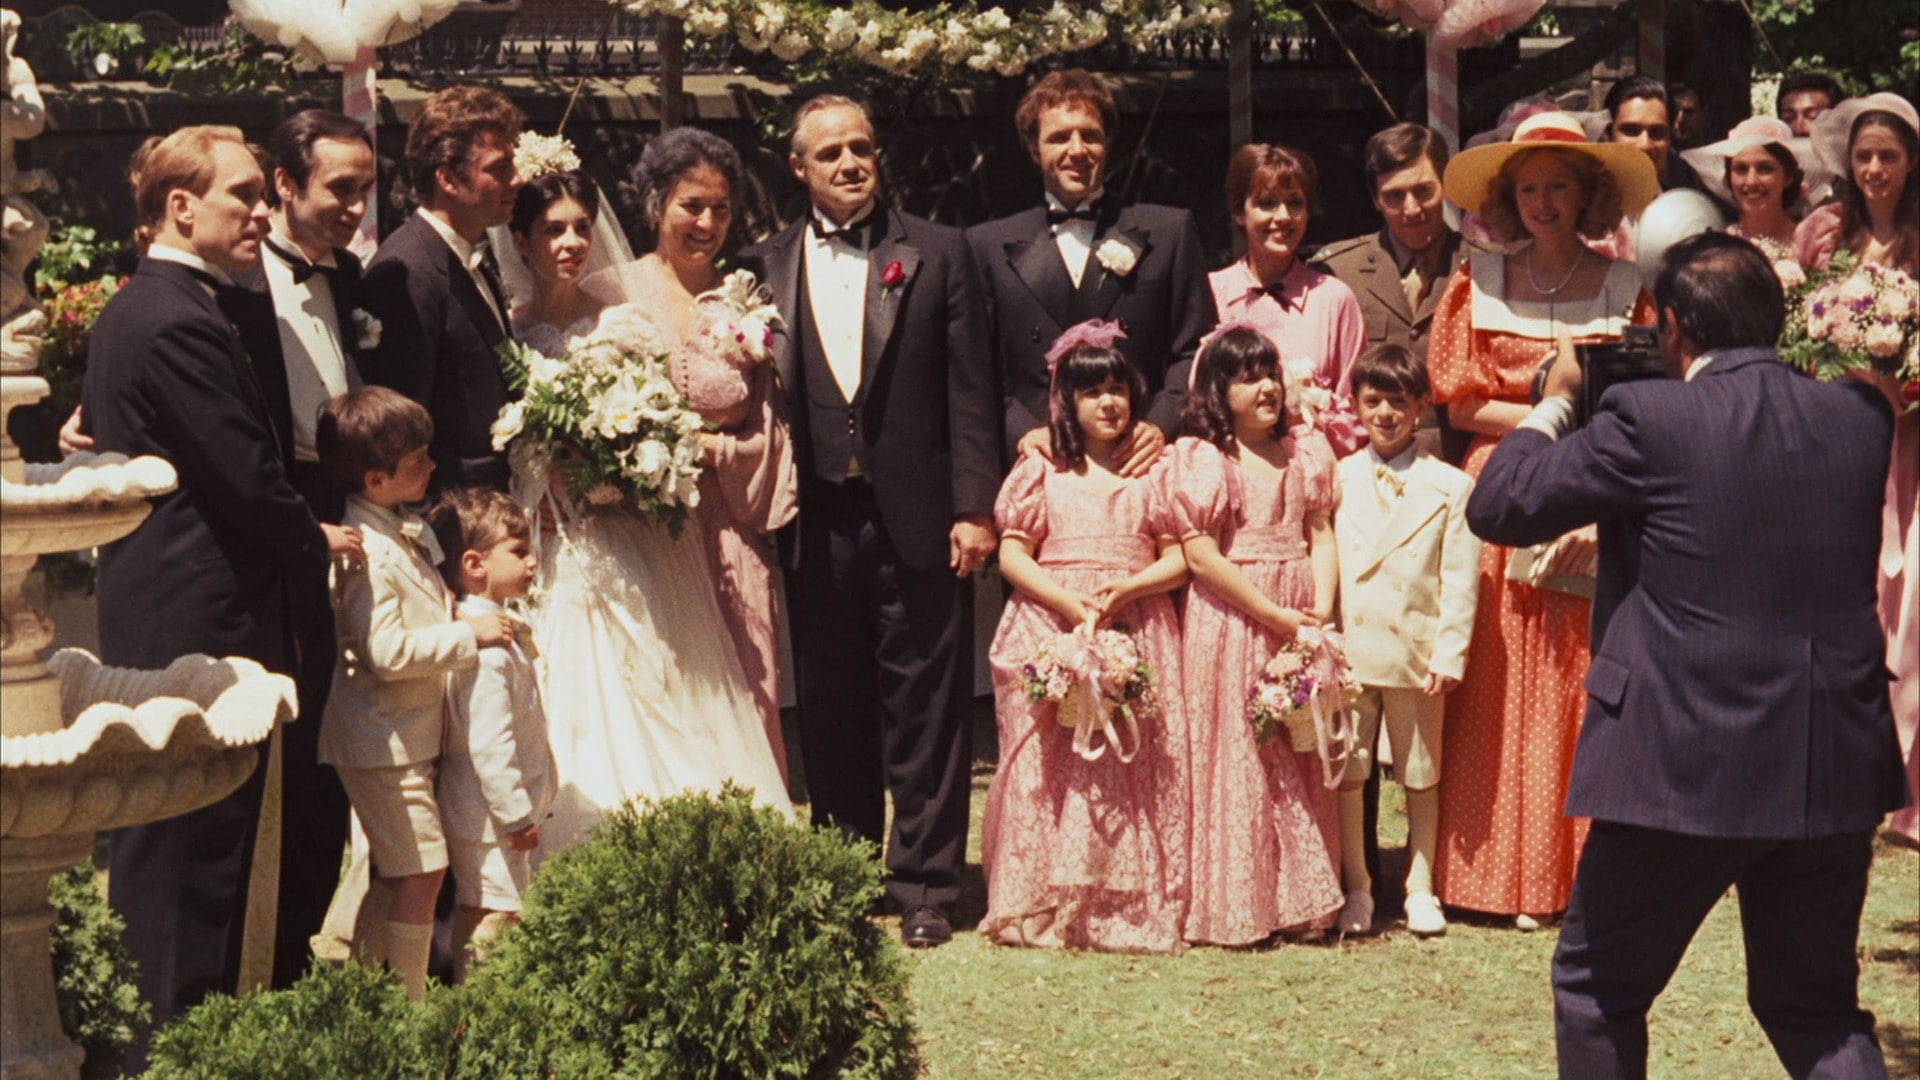 The Godfather Wedding Background